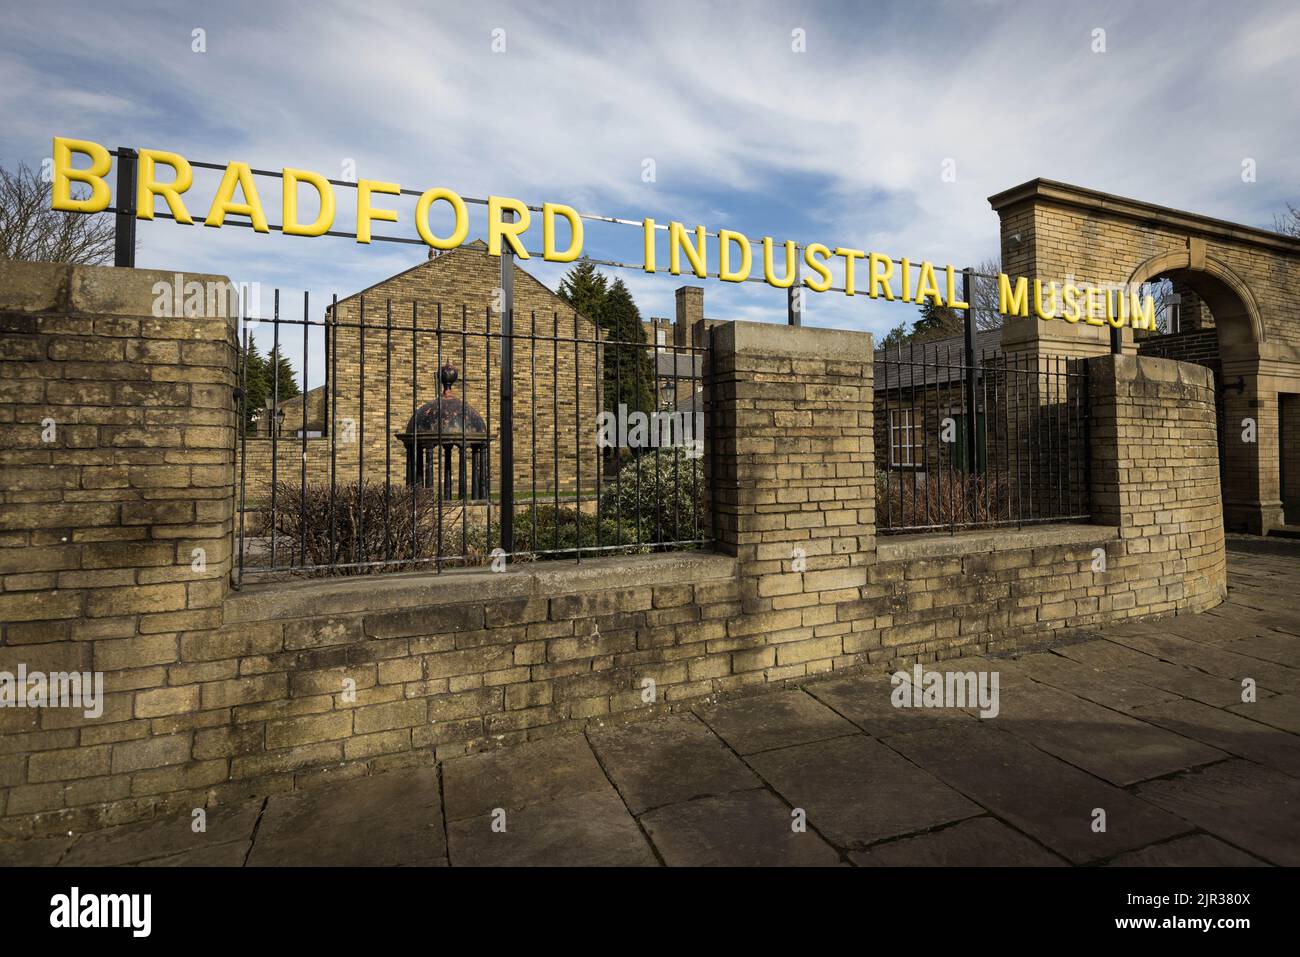 Bradford Industrial Musuem Stock Photo